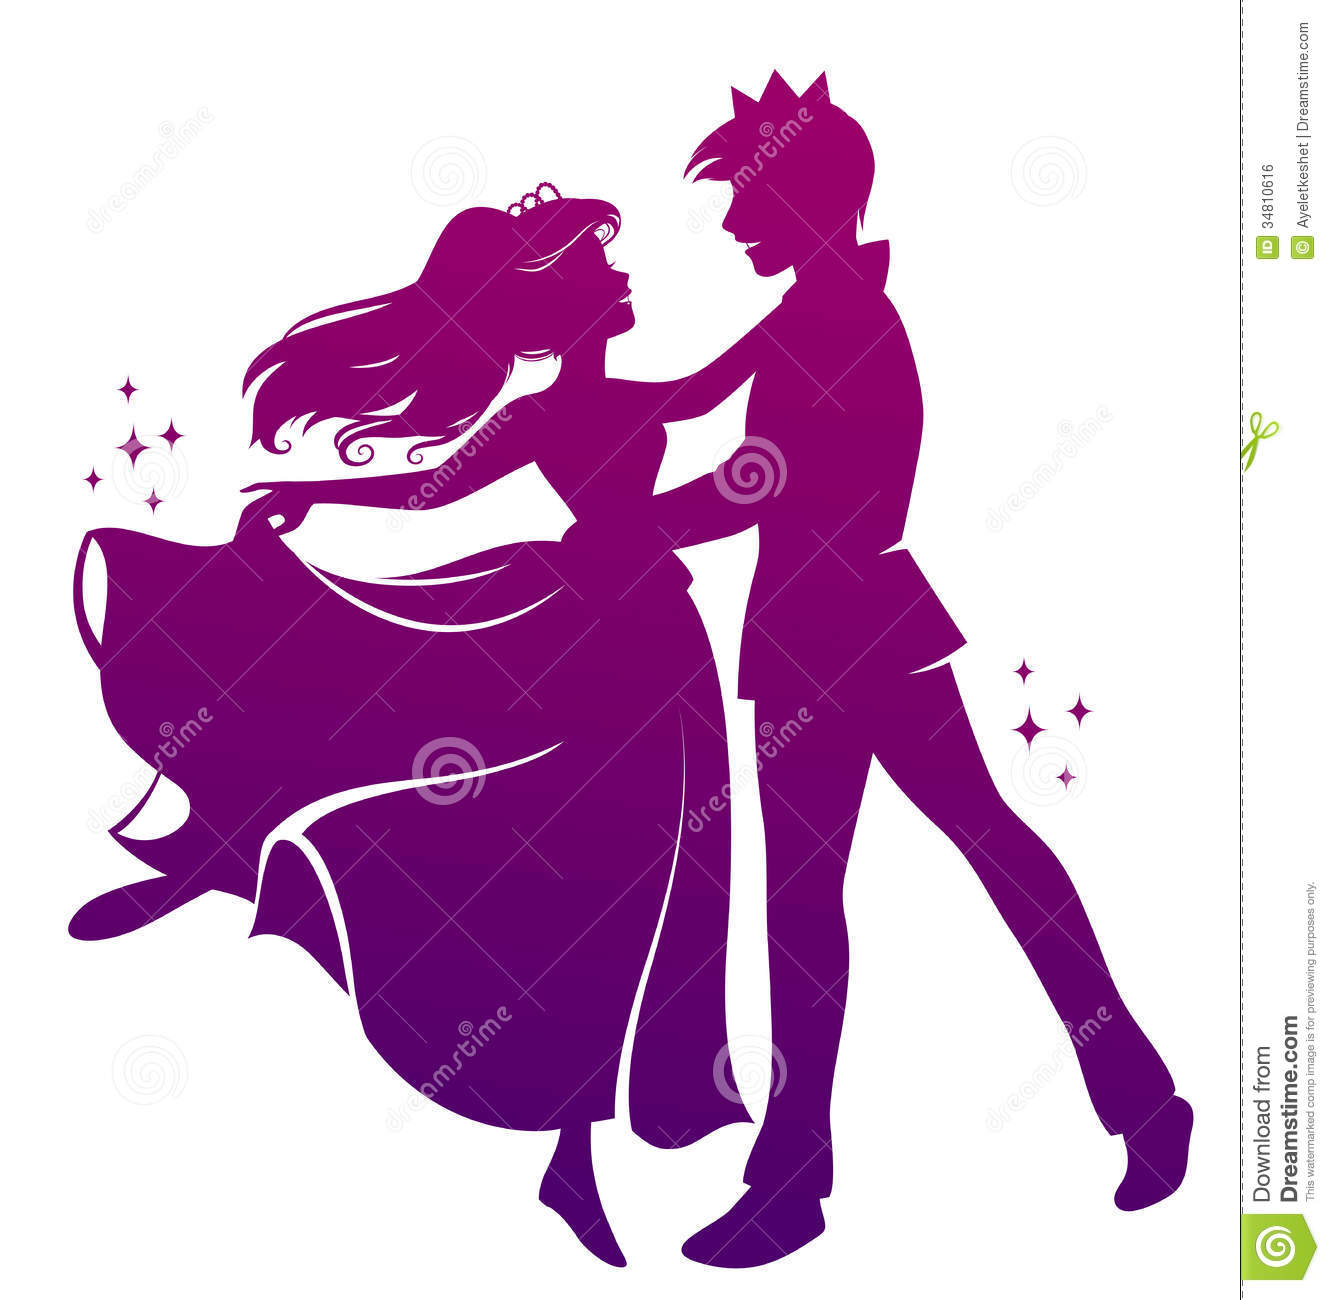 Romantic Dance Royalty Free Stock Image   Image  34810616